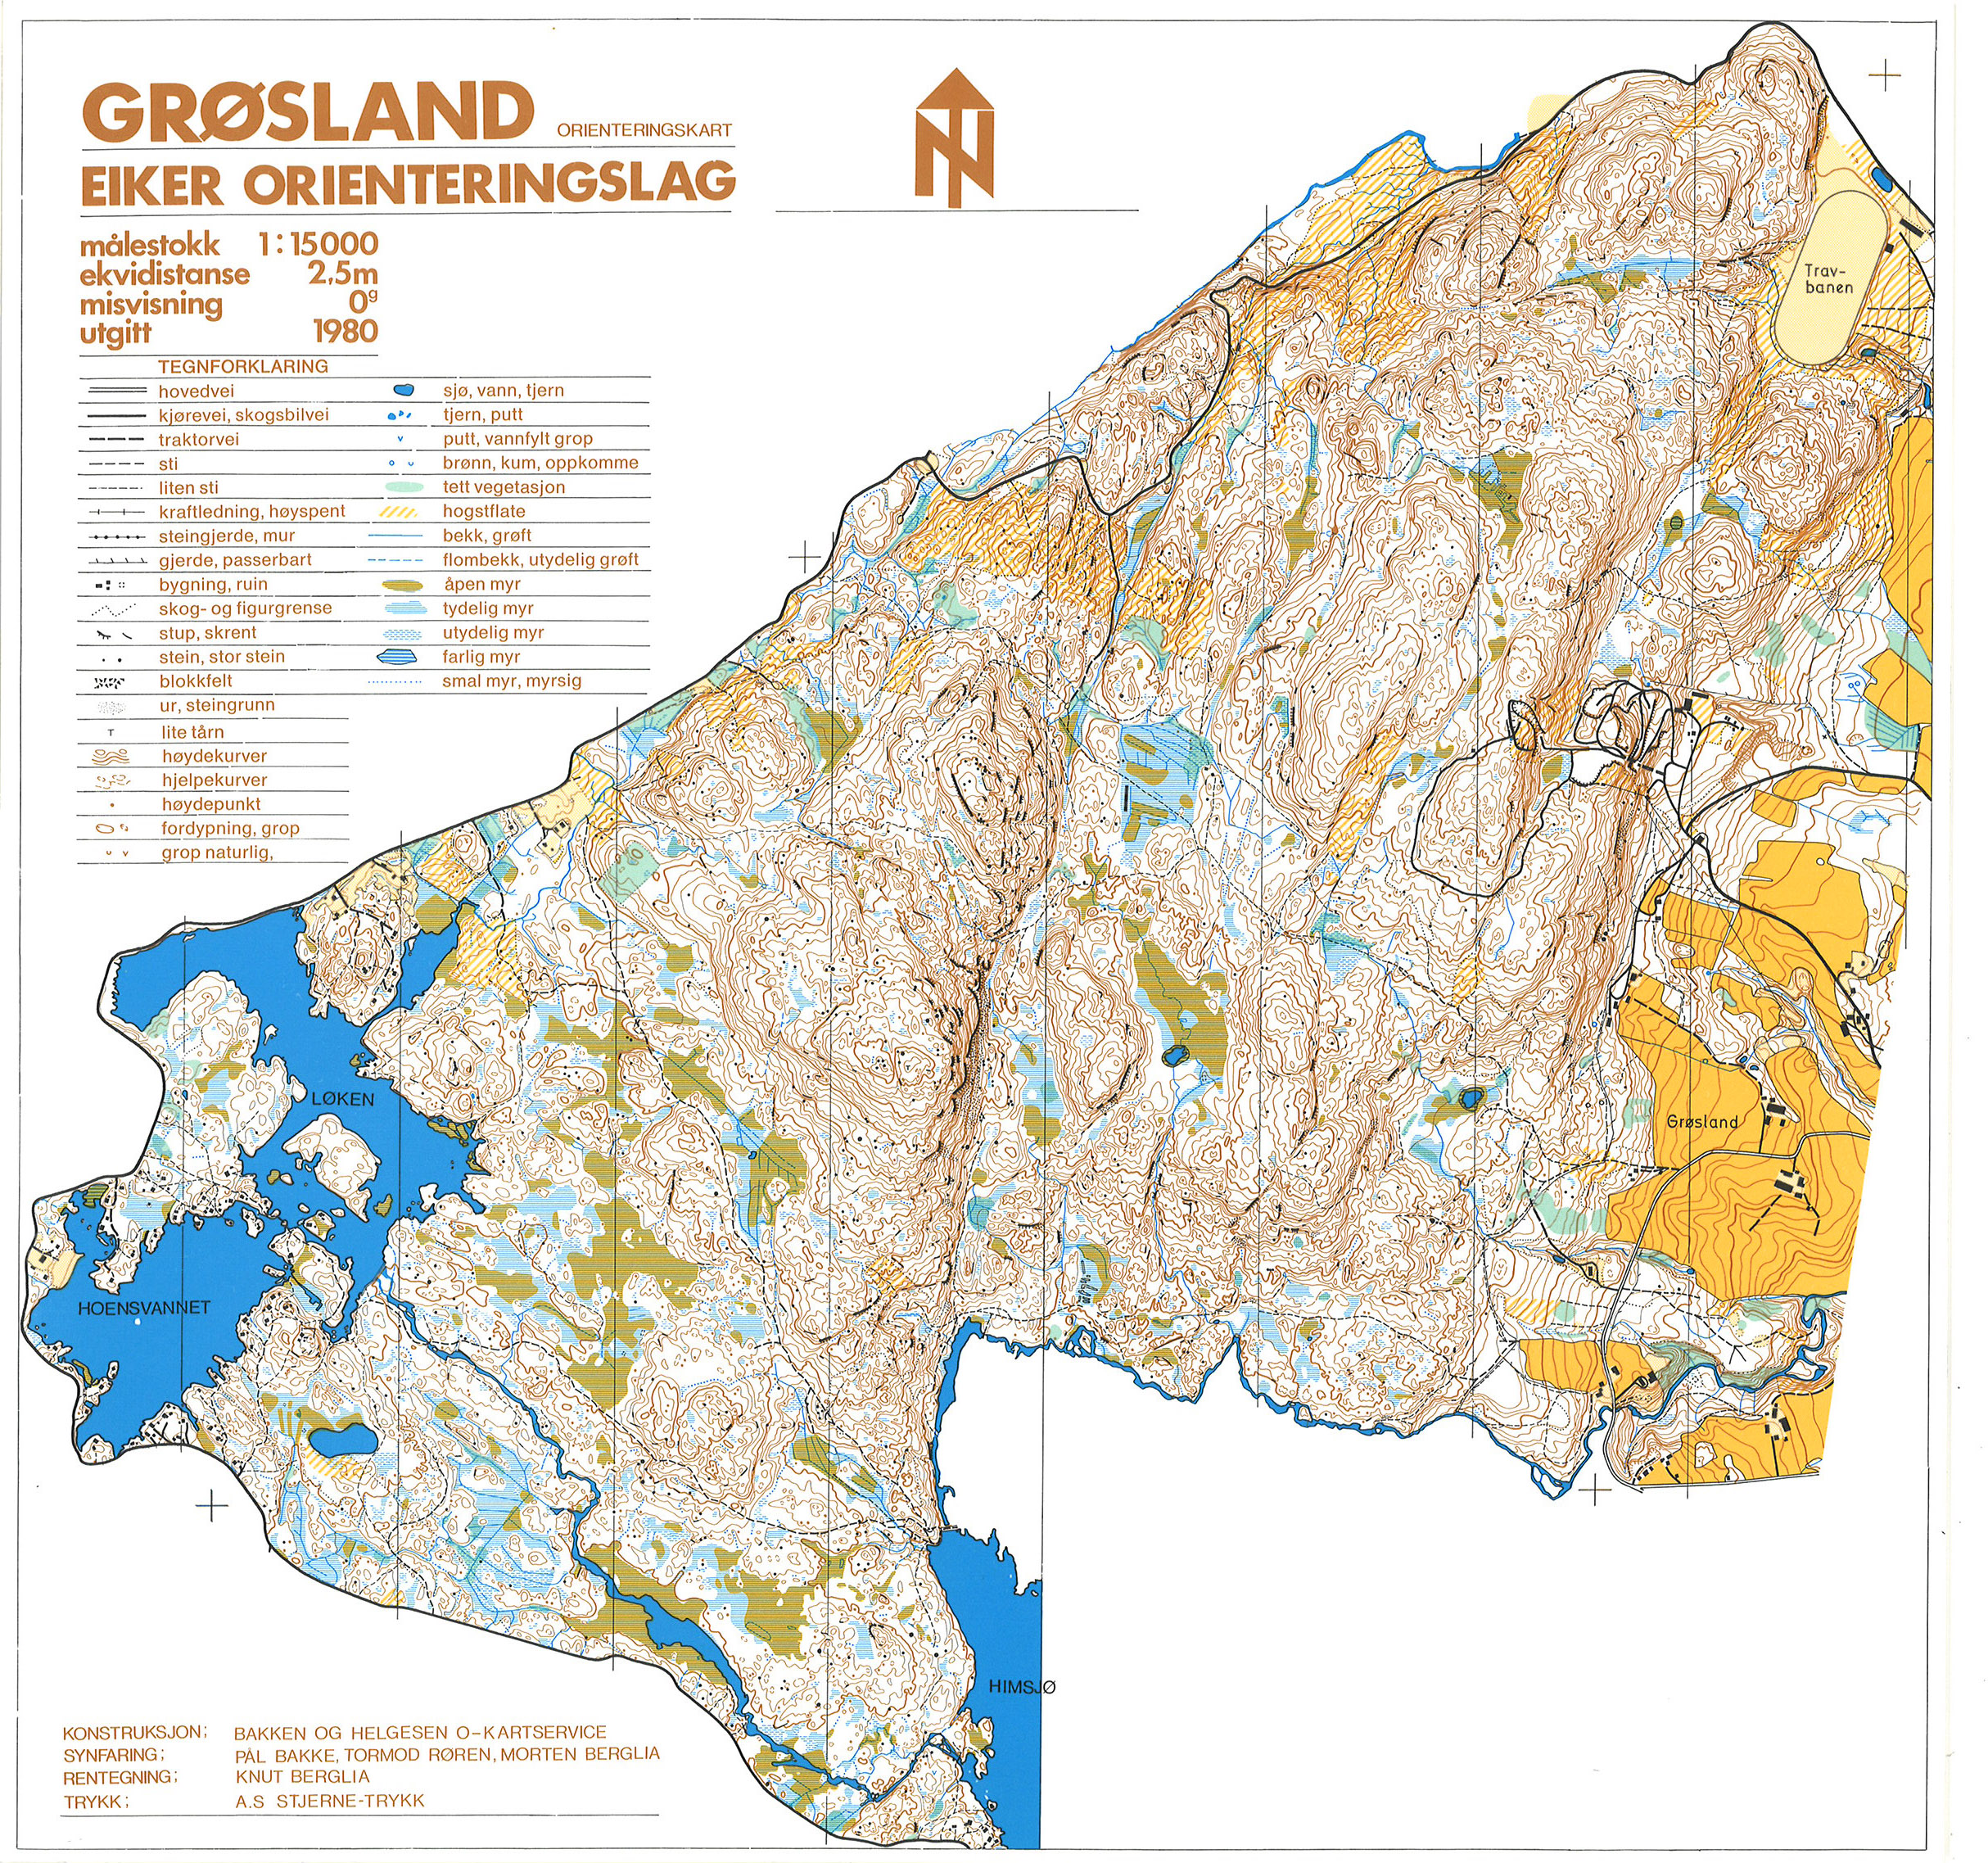 Grøsland (01-05-1980)